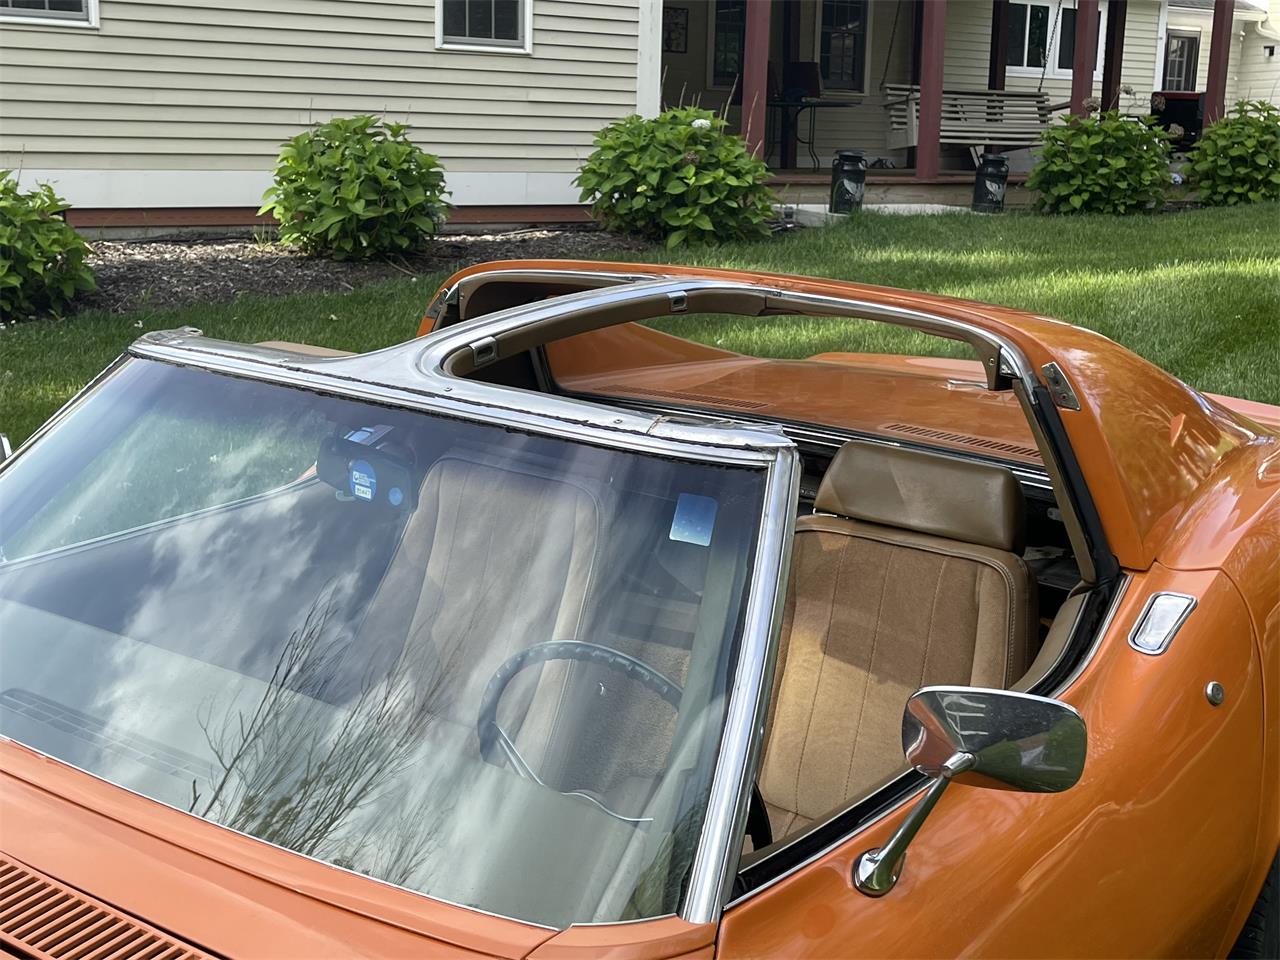 For Sale: 1969 Chevrolet Corvette in FOSTER, Rhode Island for sale in Foster, RI